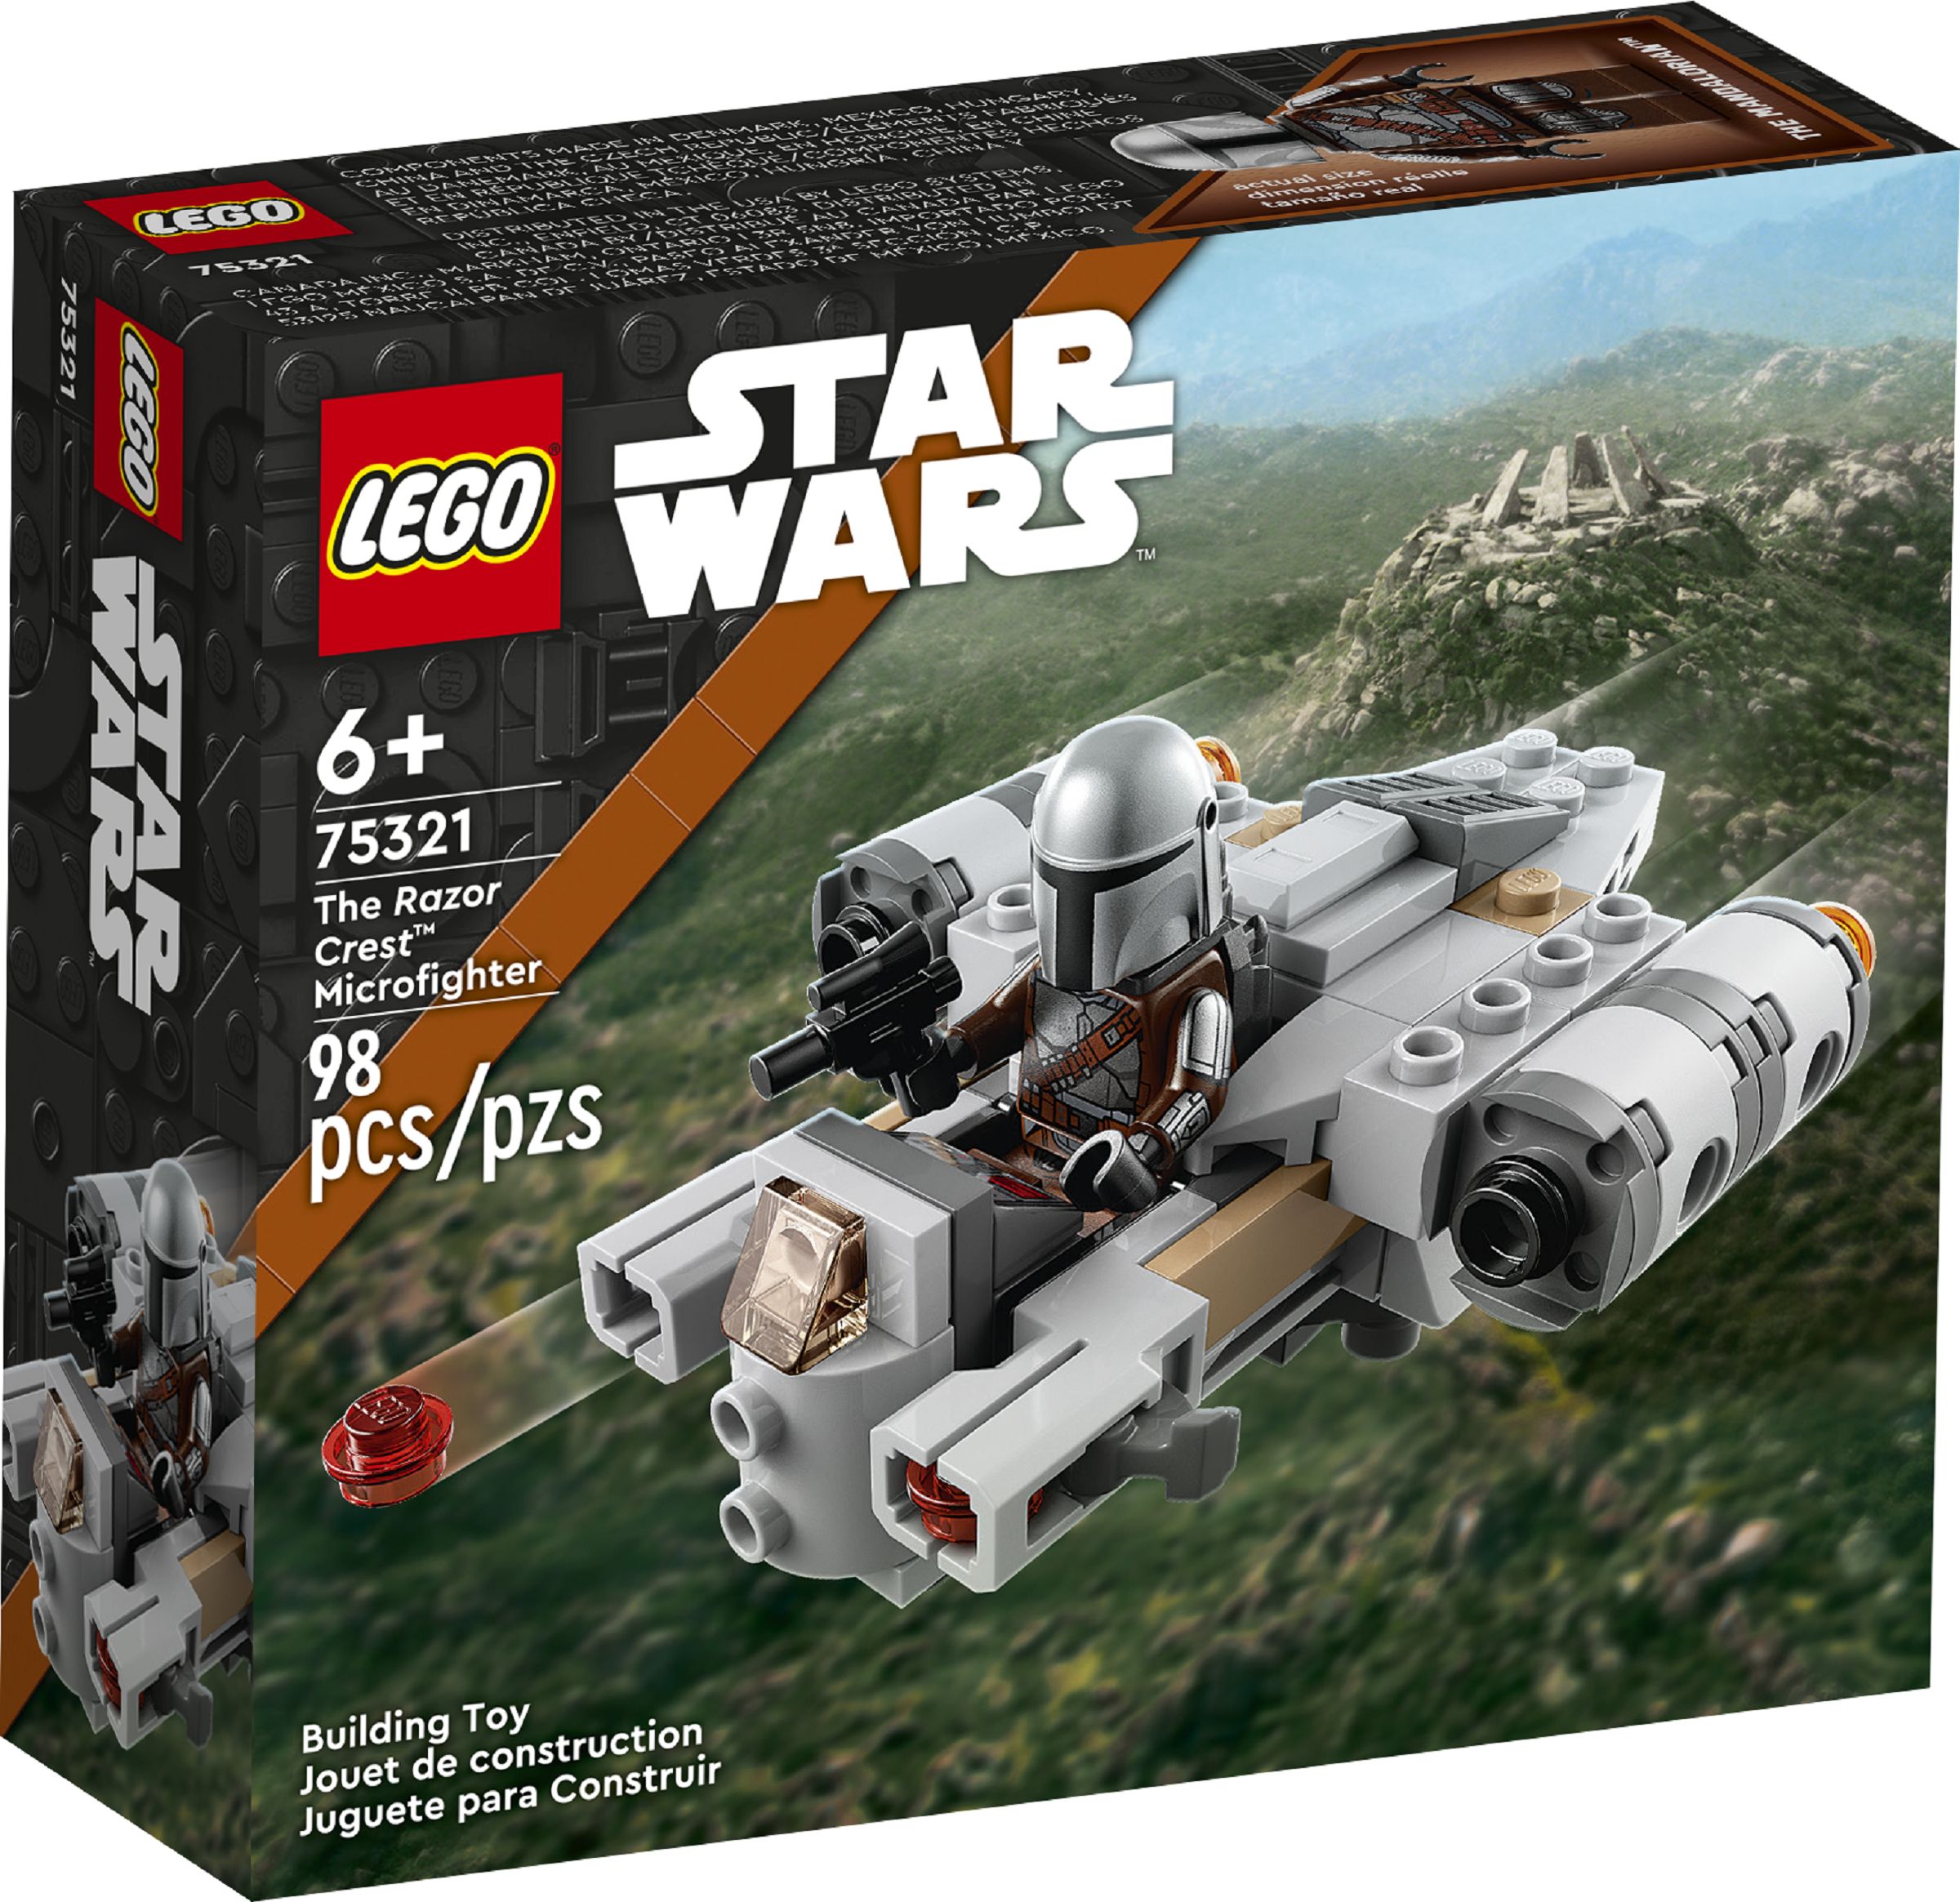 LEGO Star Wars 75321 Razor Crest™ Microfighter LEGO_75321_alt1.jpg